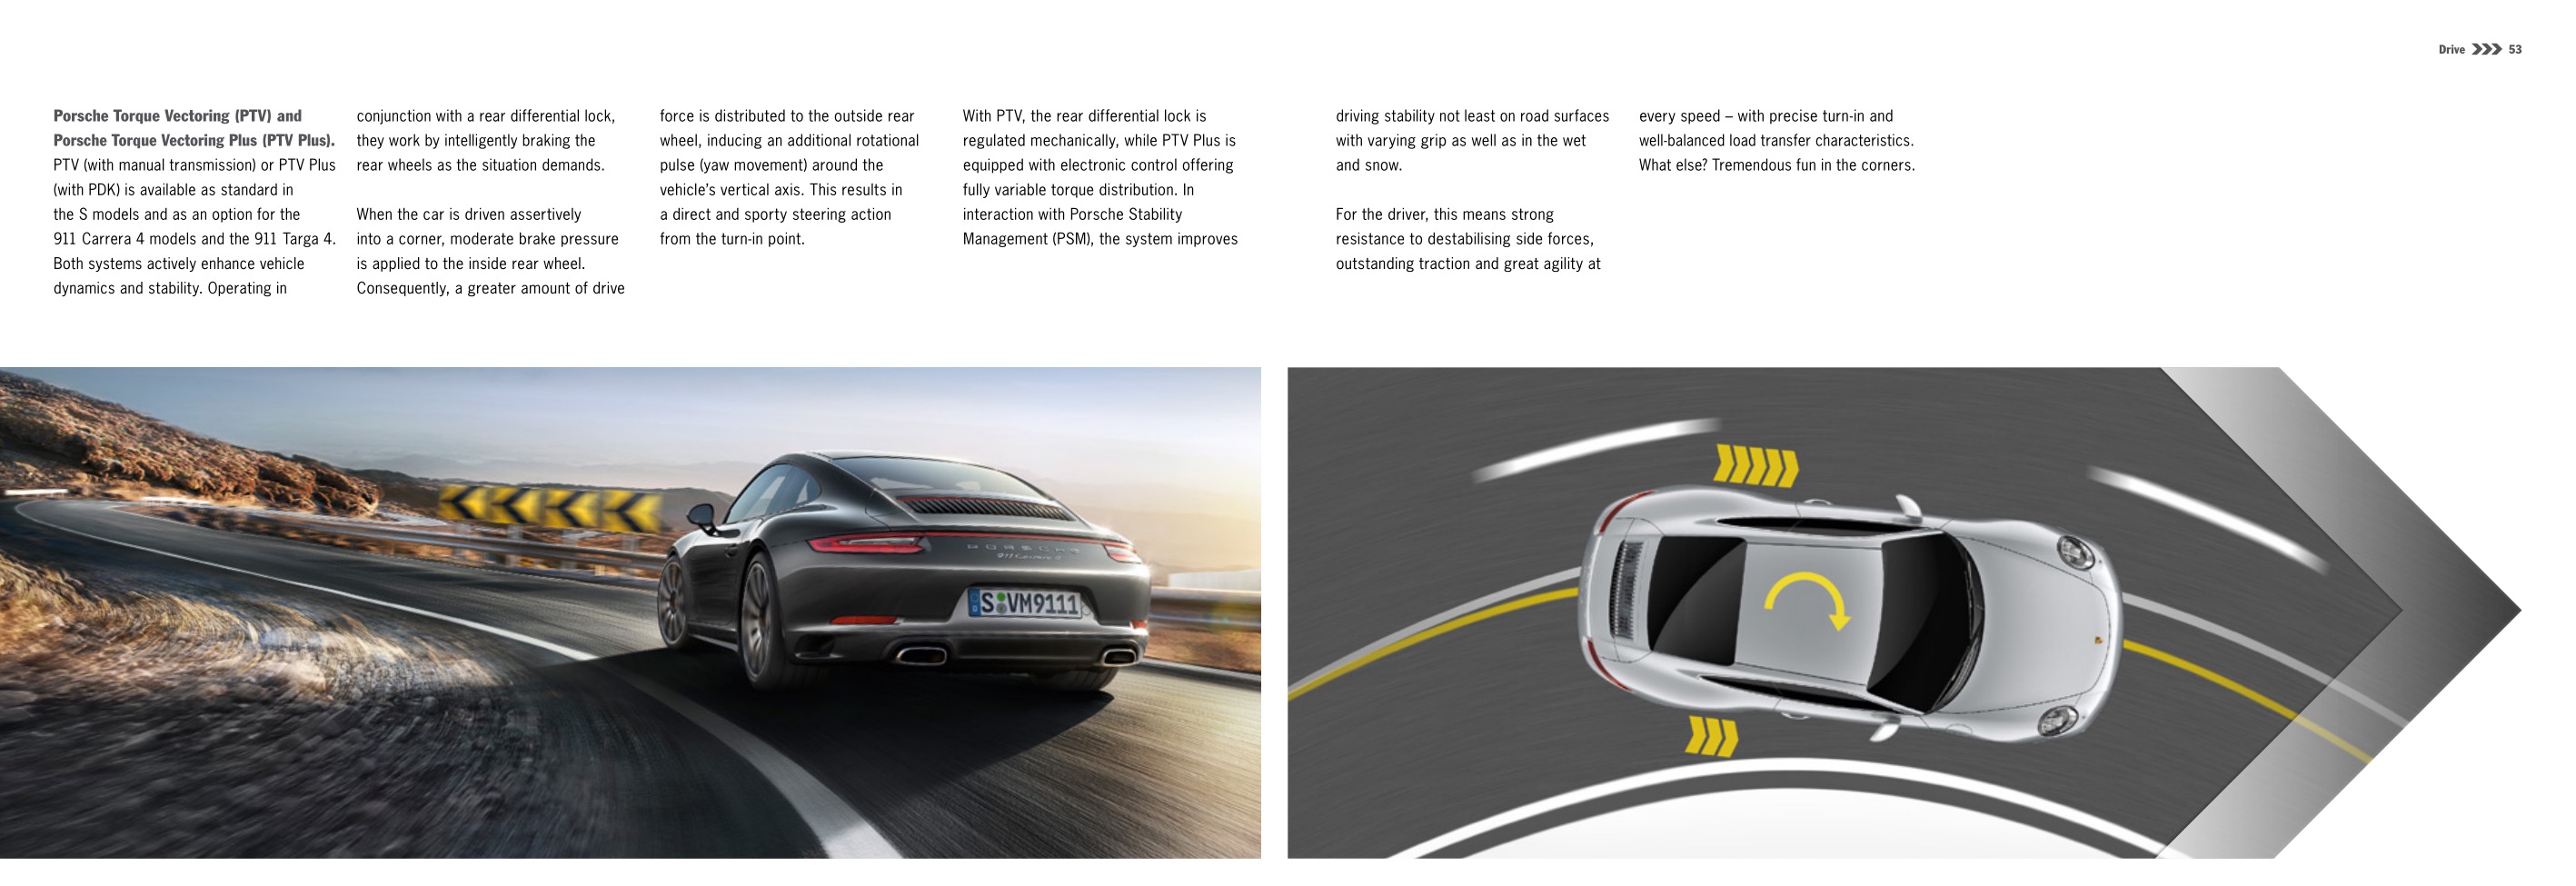 2016 Porsche 911 Brochure Page 65